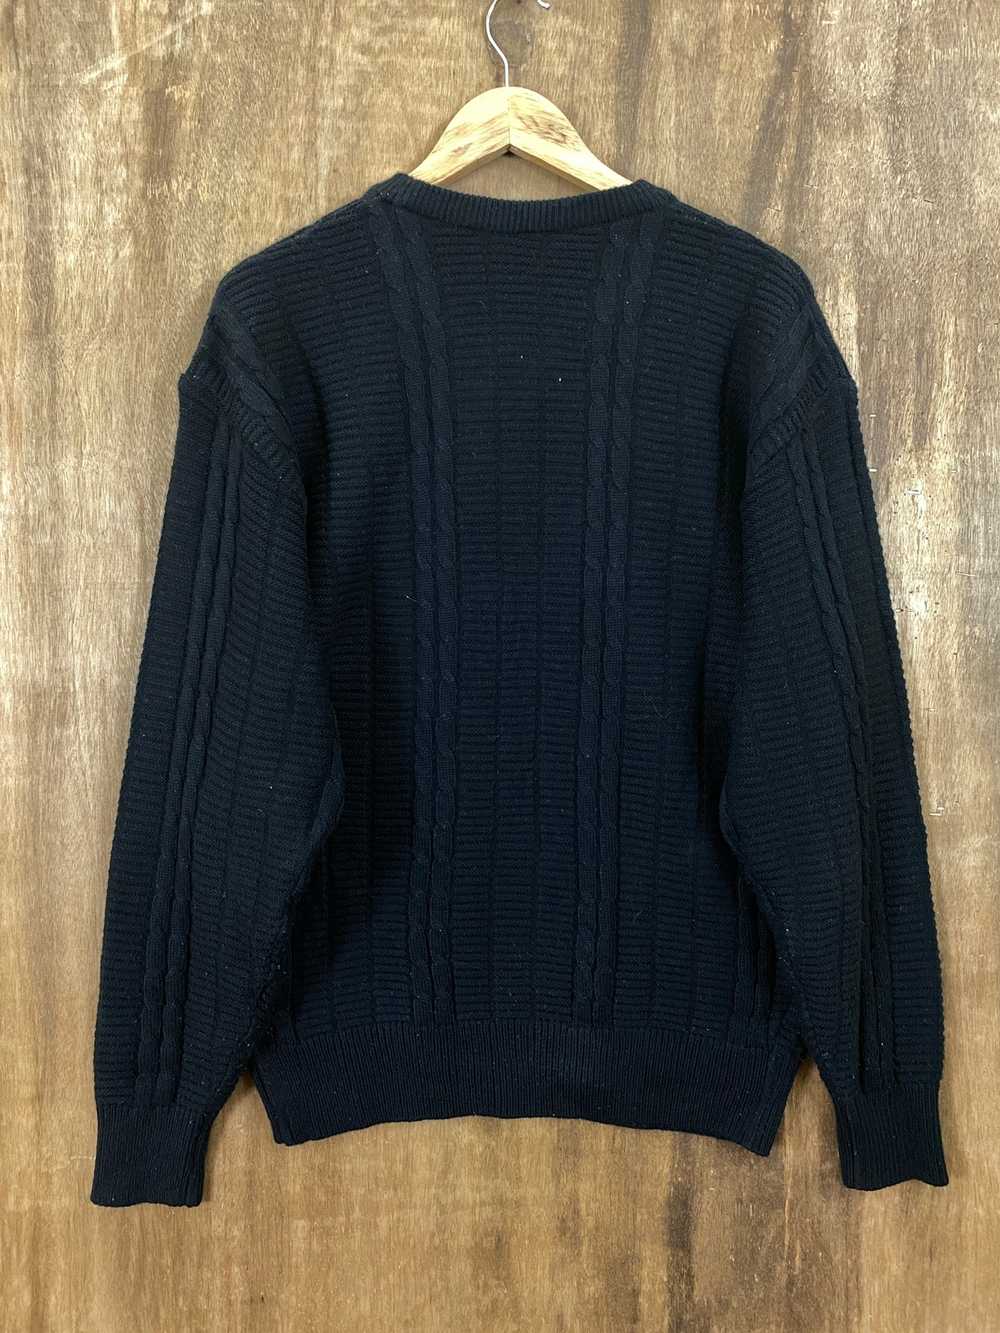 Japanese Brand - Japanese Brand Black Knit Sweate… - image 4